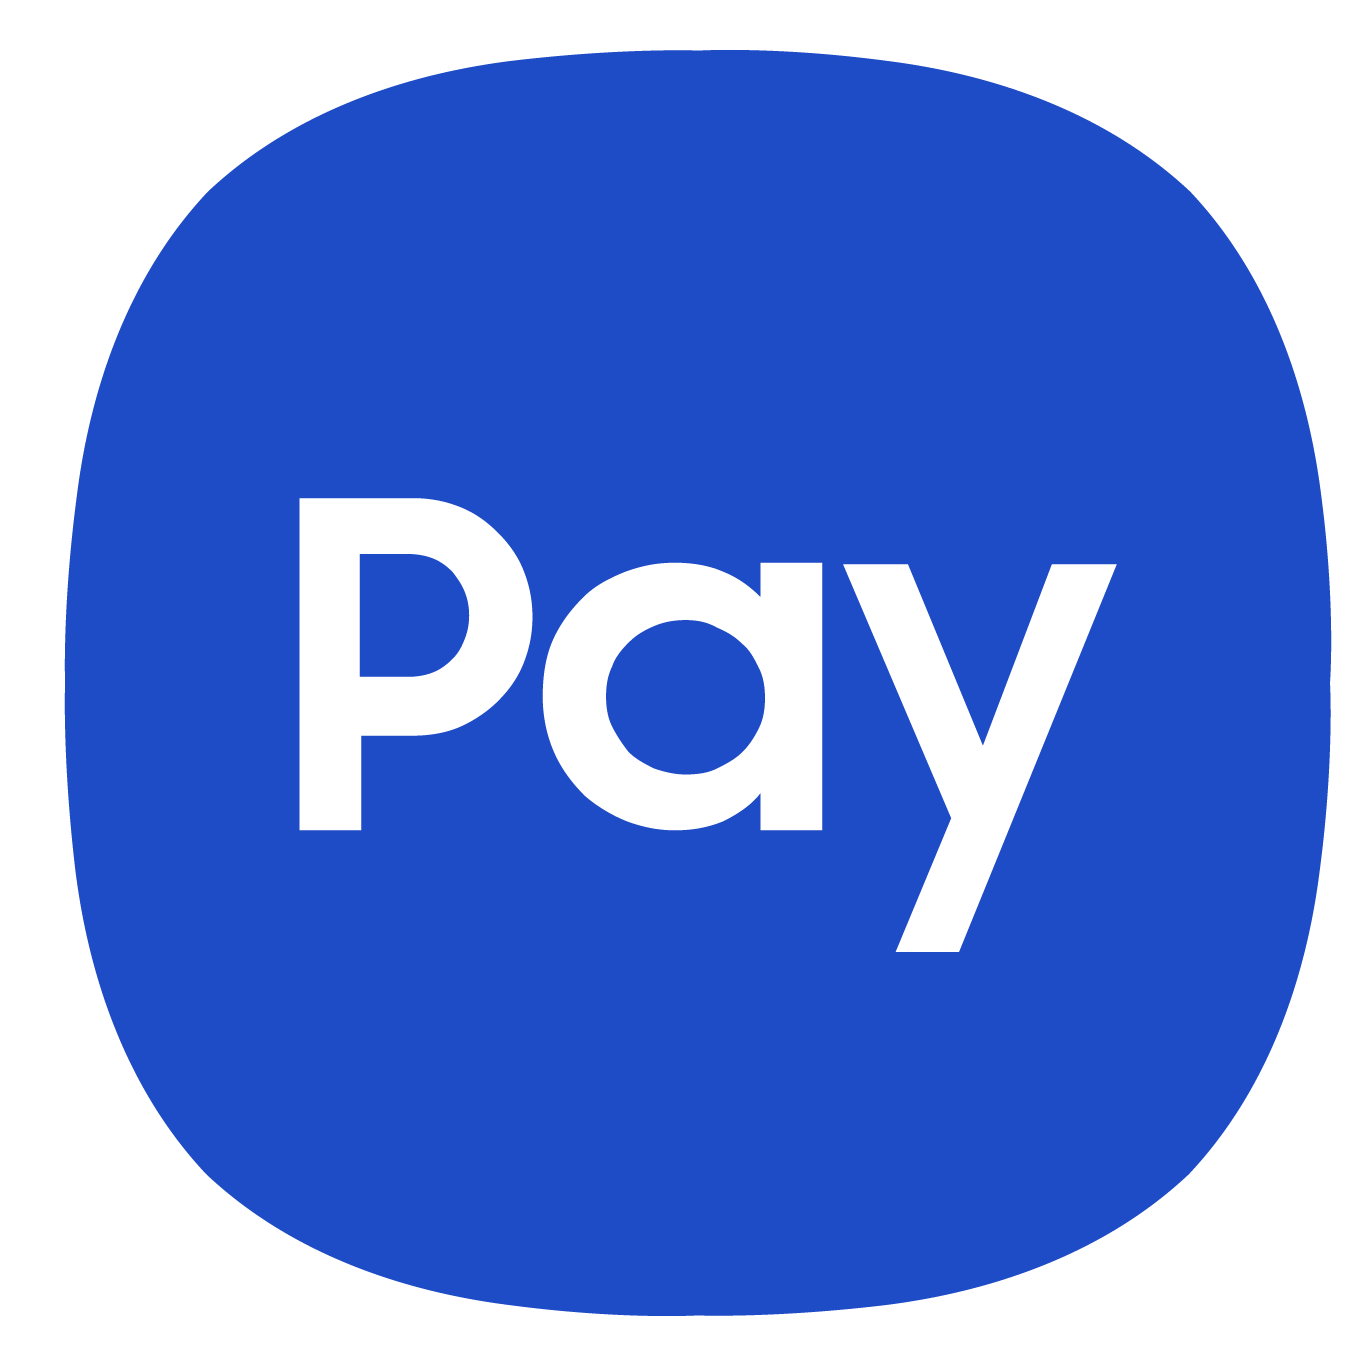 samsung-pay-logo.png